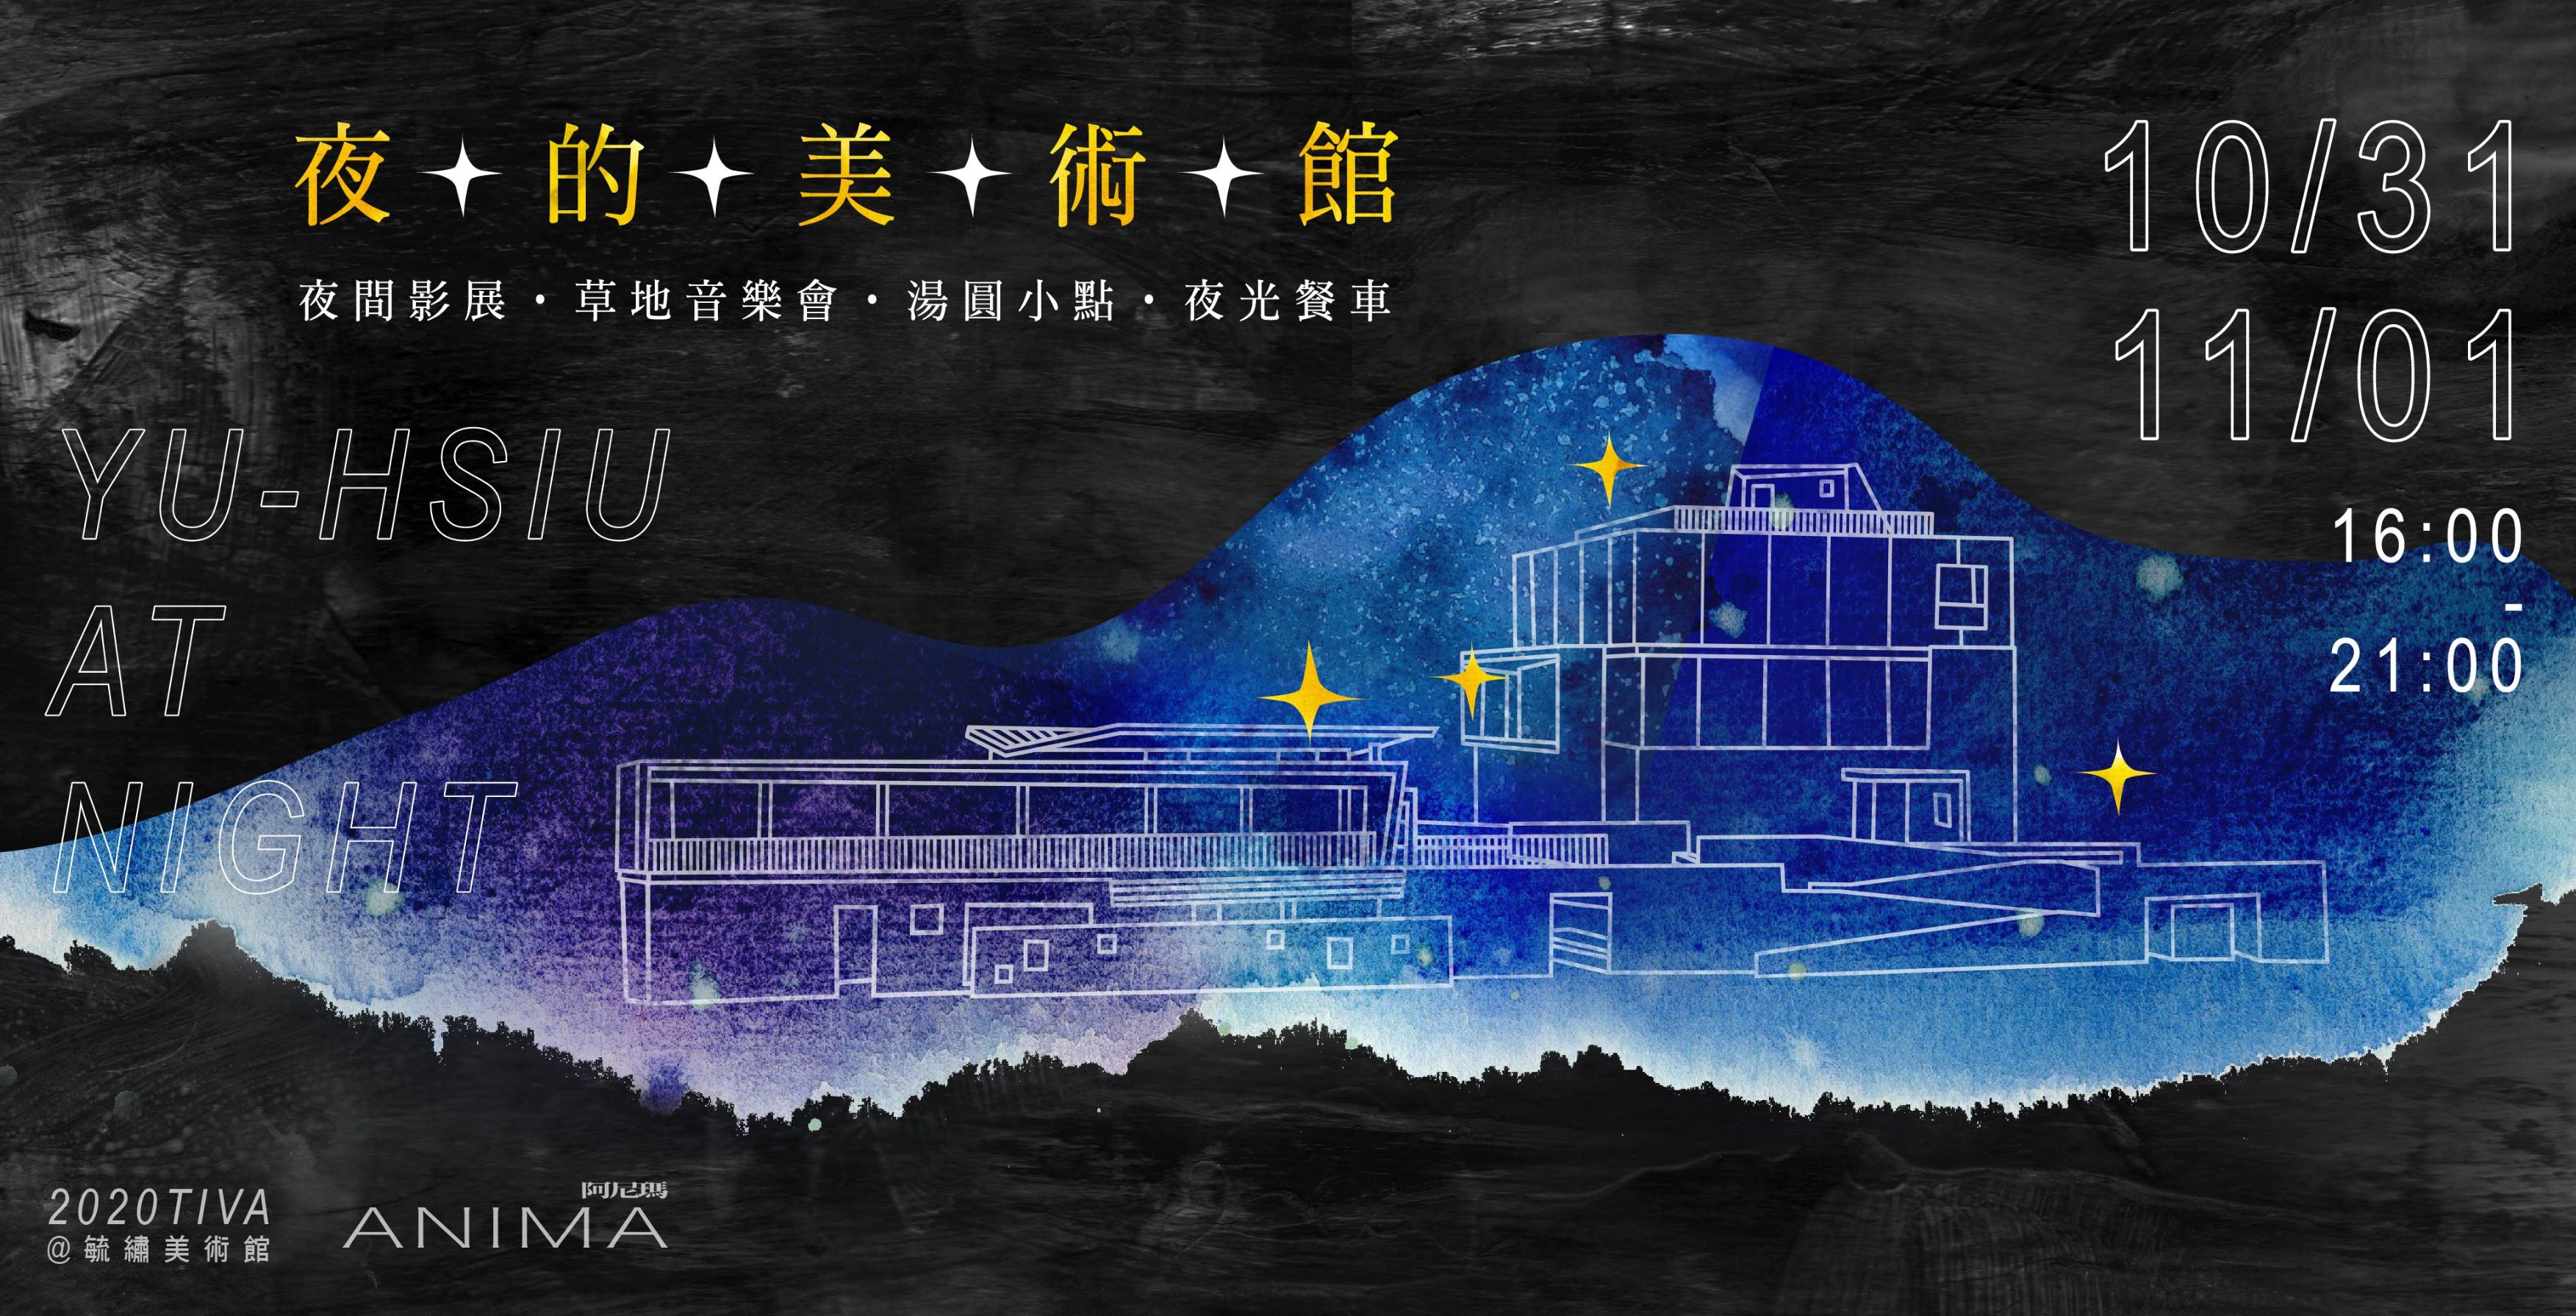 【Art Museum of the Night】2020TIVA @ Yuxiu Art Museum